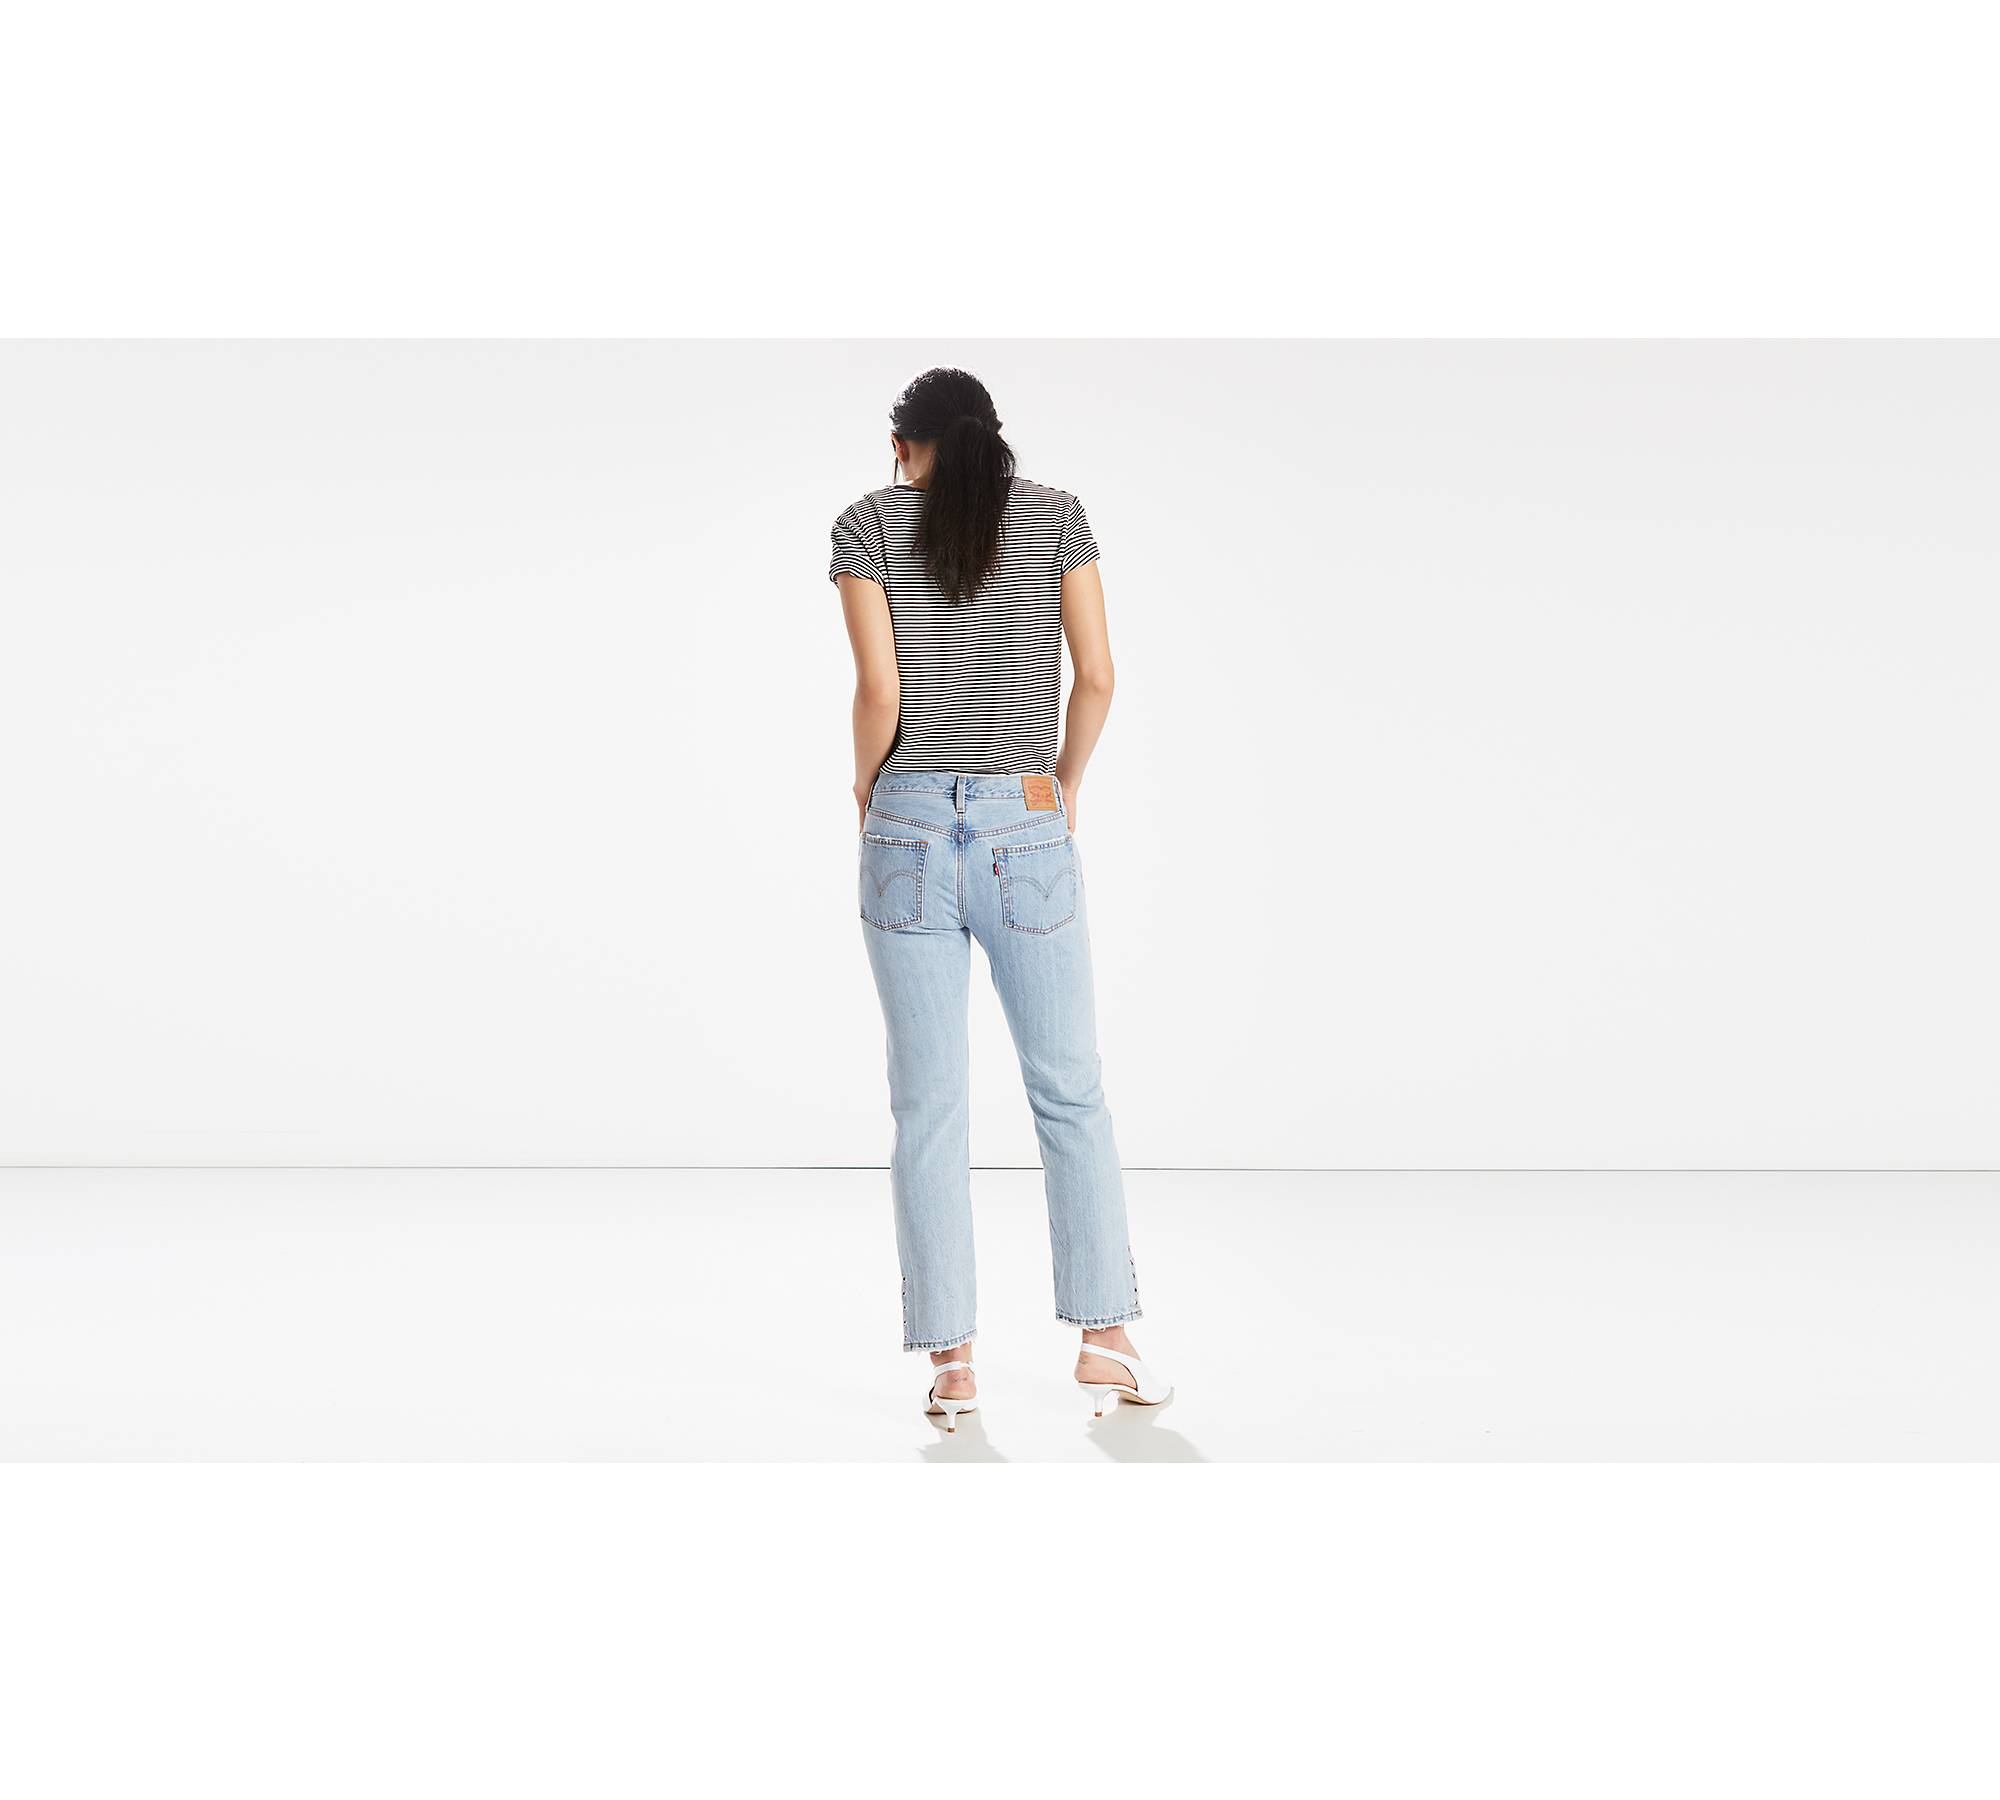 501® Original Cropped Women's Jeans - Light Wash